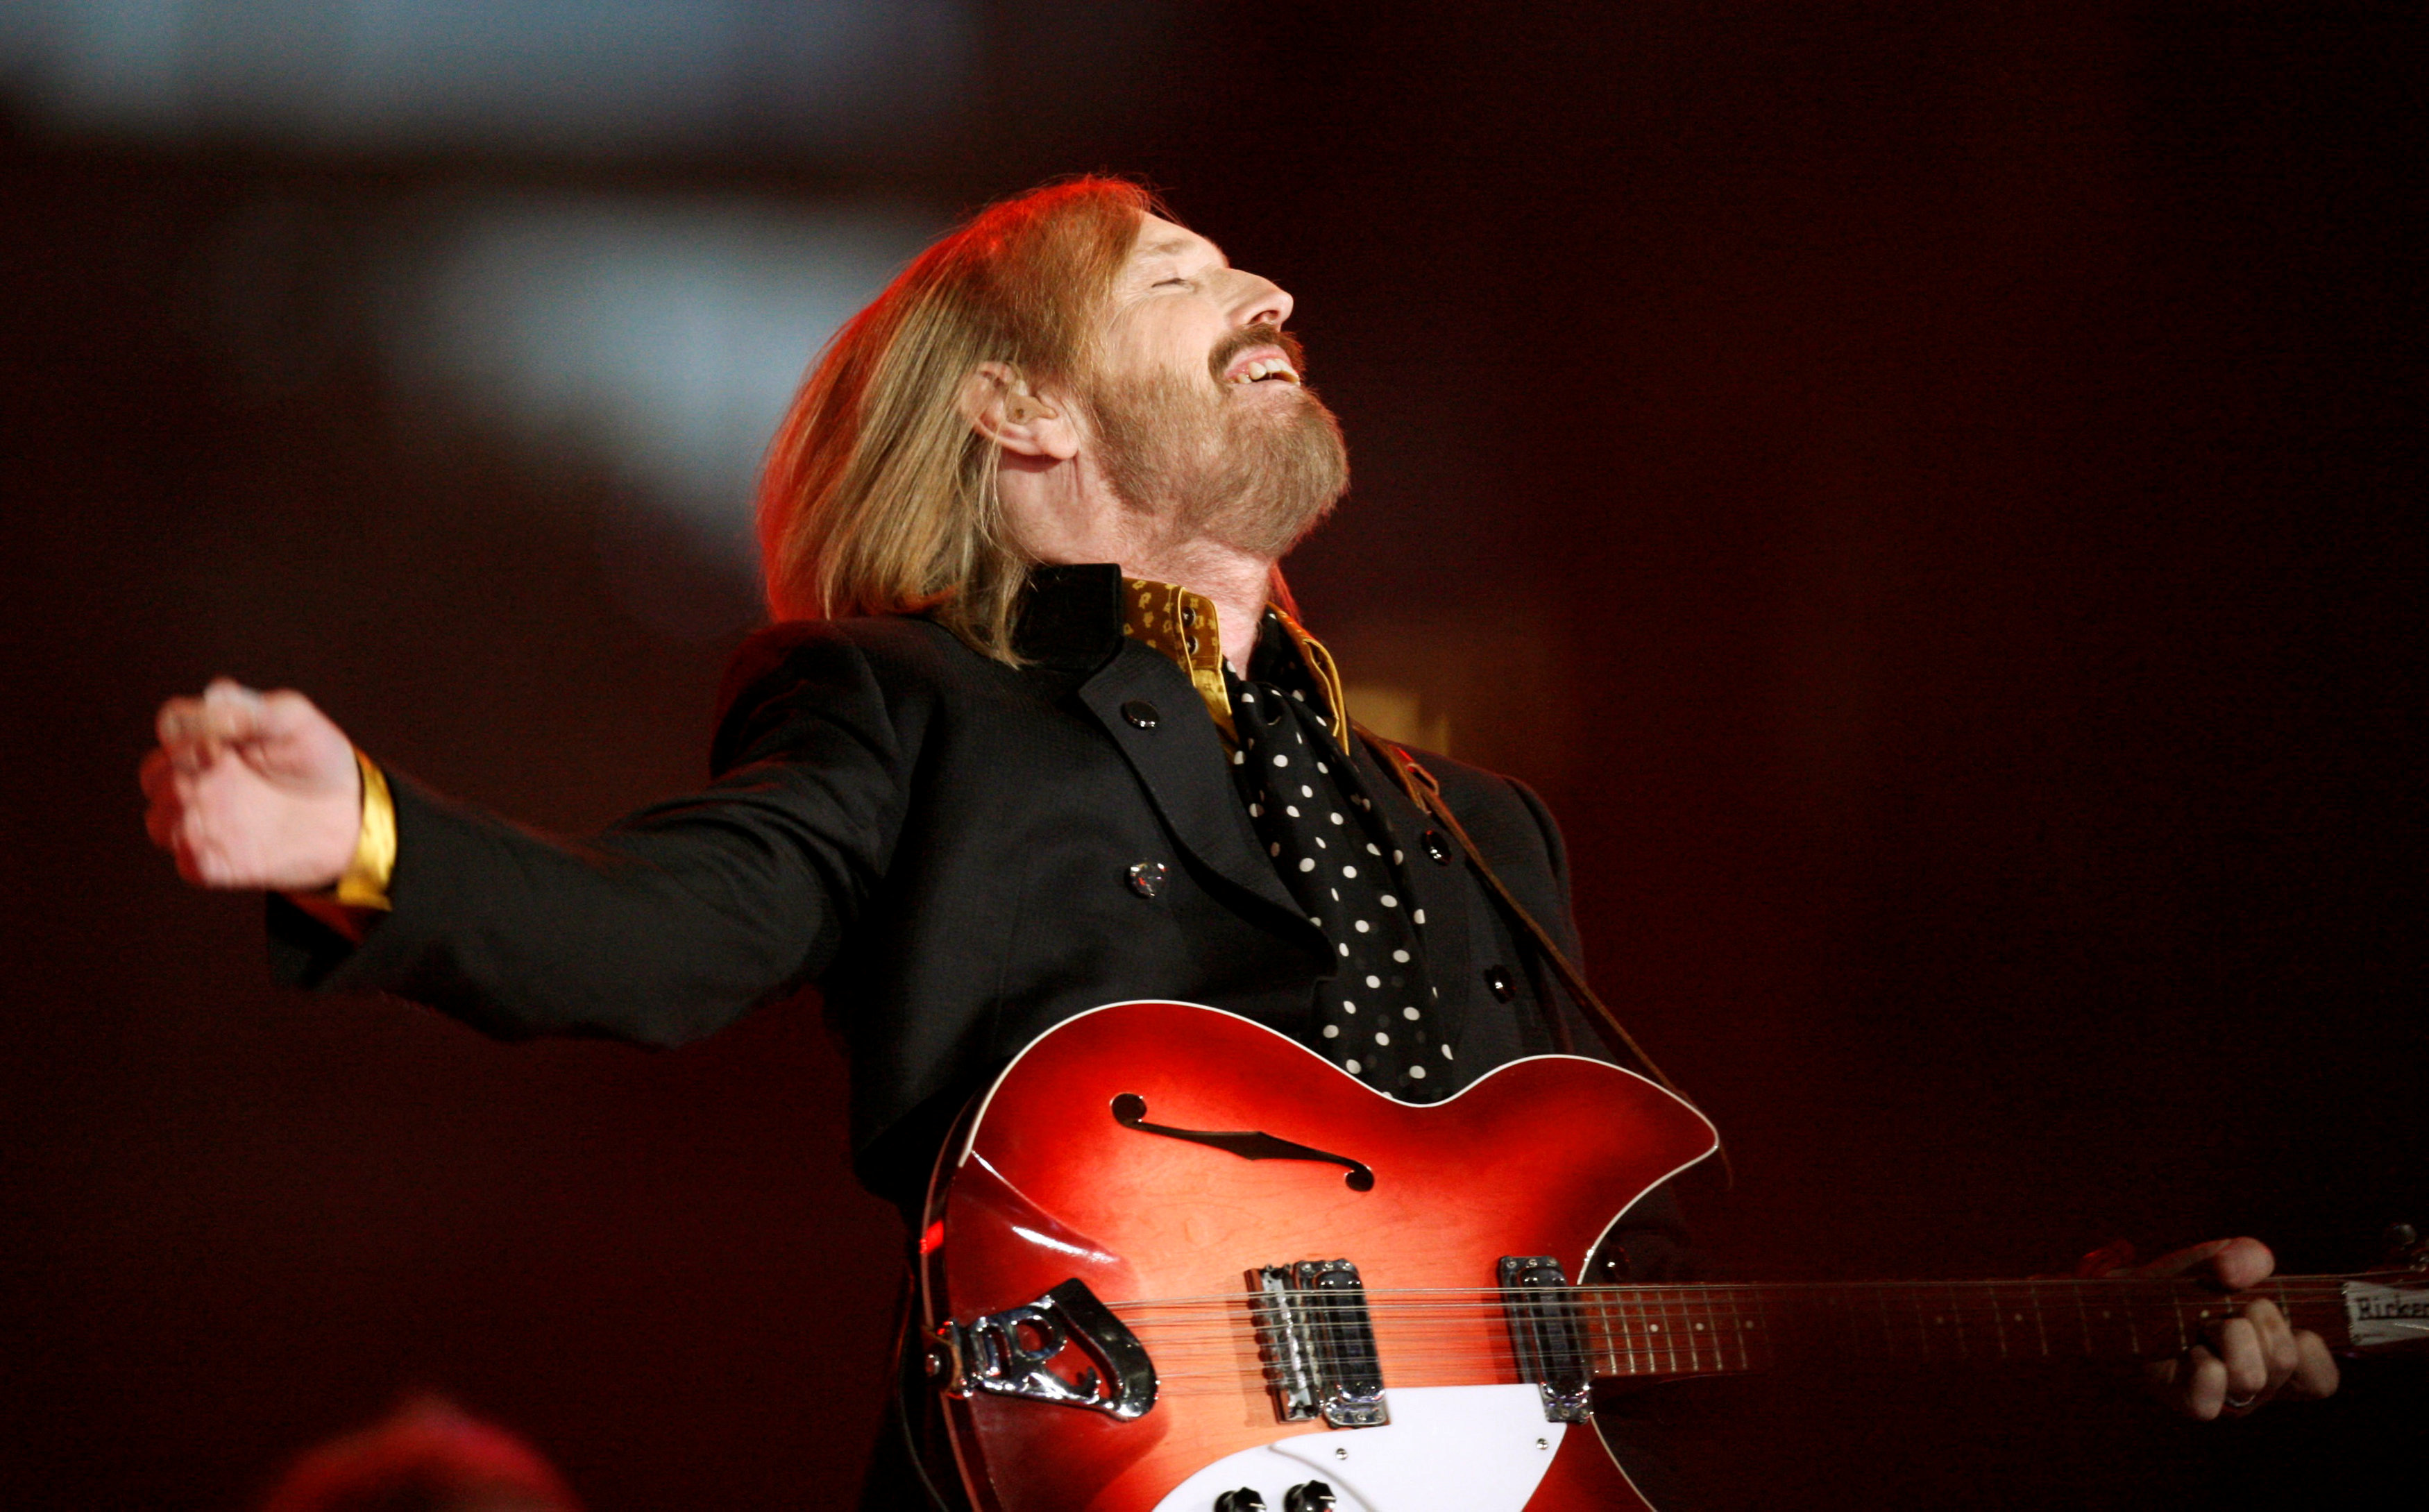 Veteran U.S. rocker Tom Petty dies at 66 after suffering cardiac arrest